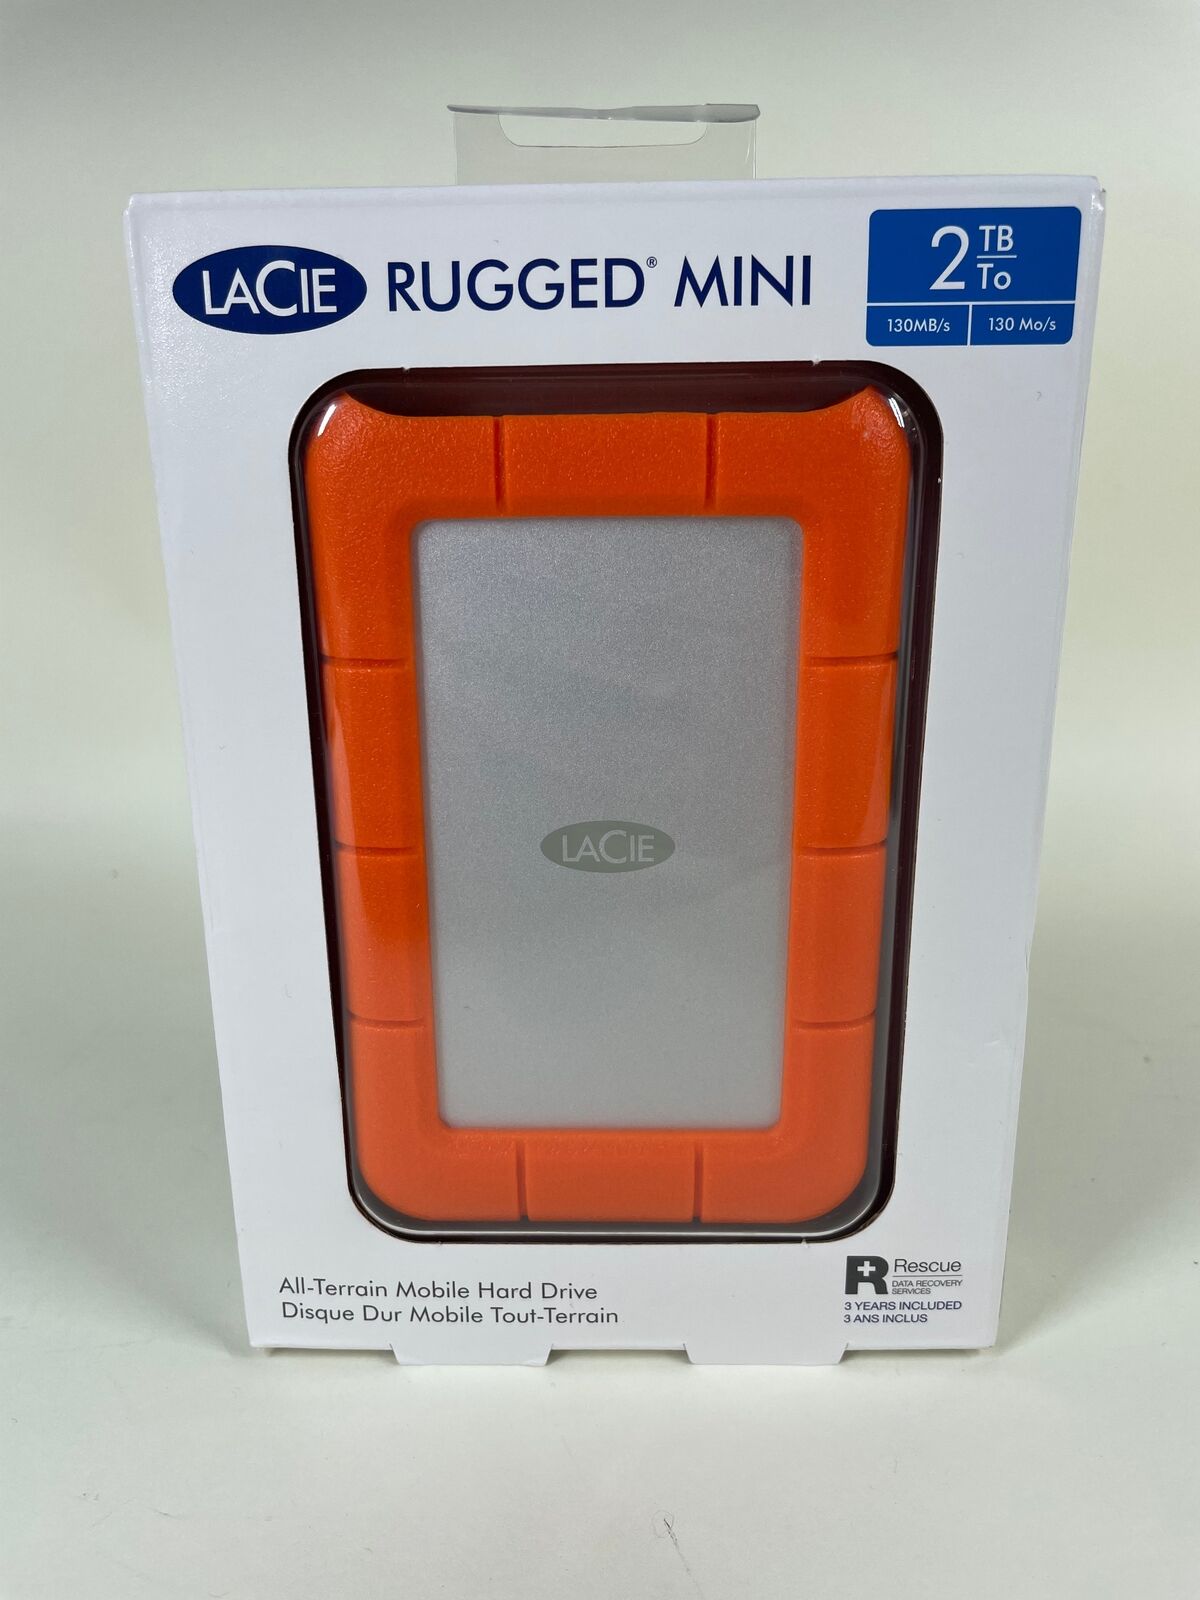 New Lacie Rugged Mini 2TB All-Terrain Mobile Hard Drive LAC9000298